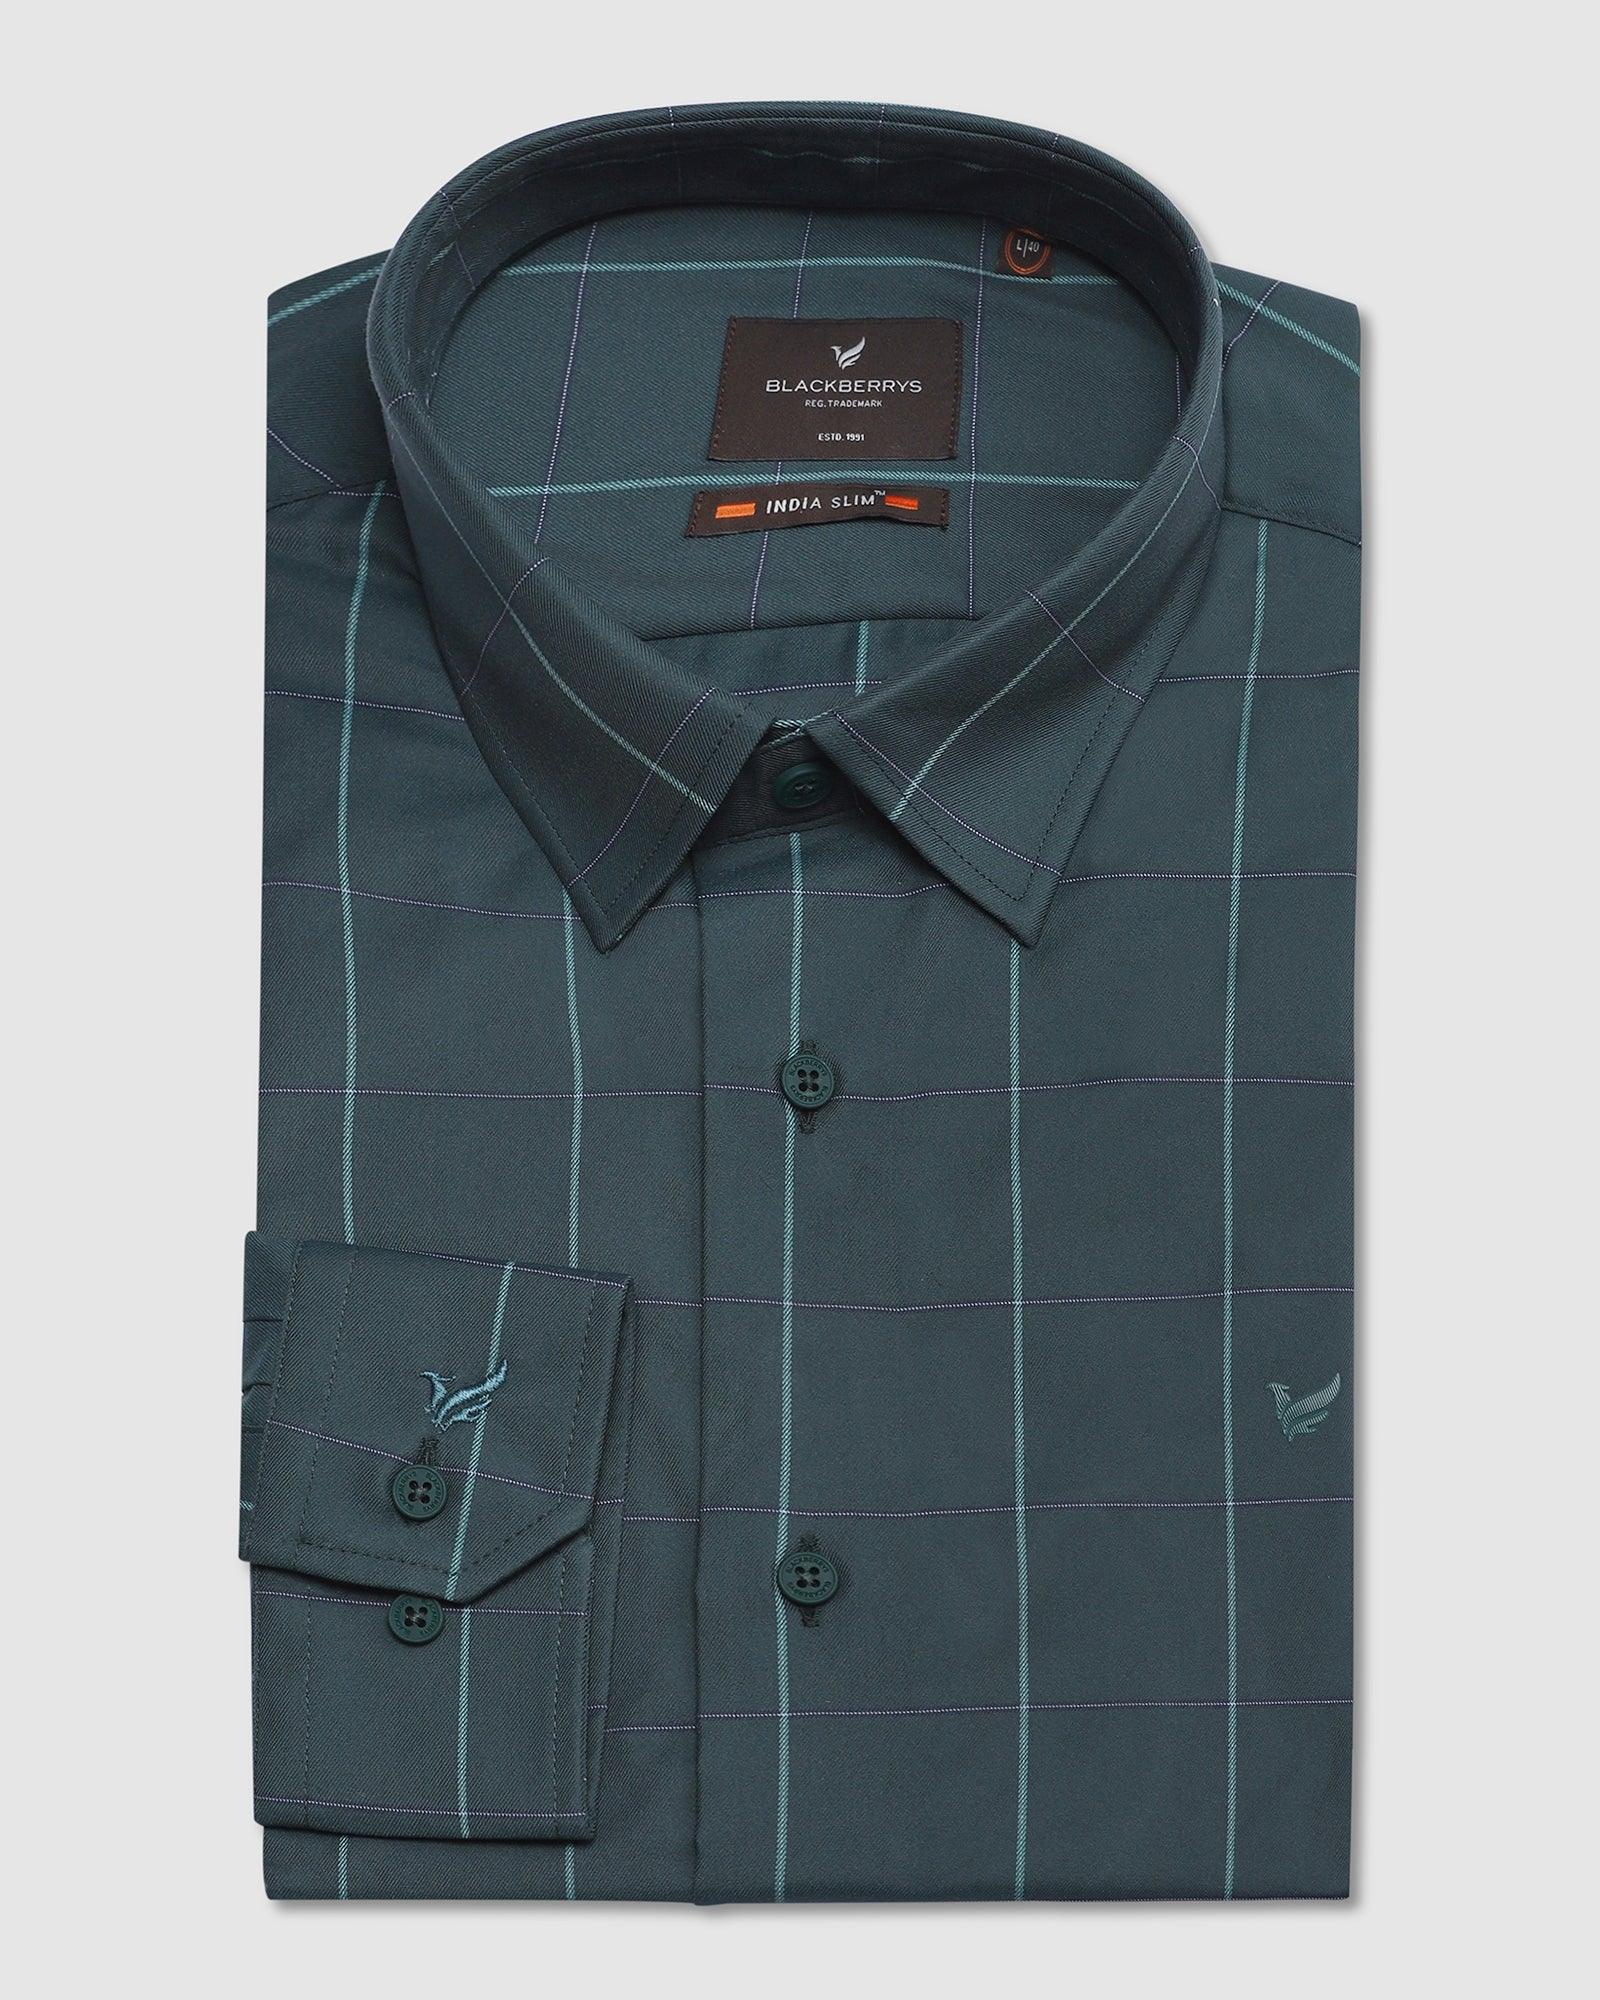 TechPro Formal Green Check Shirt - Figo